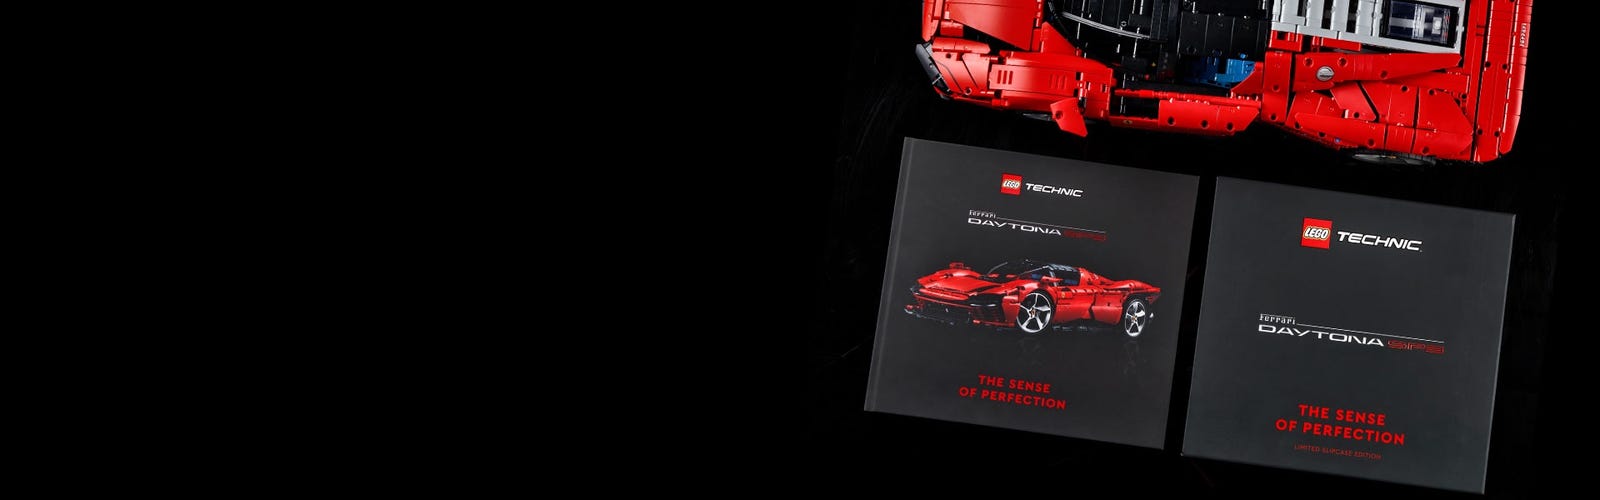 LEGO Technic 42143 Ferrari Daytona SP3, Voiture Modélisme